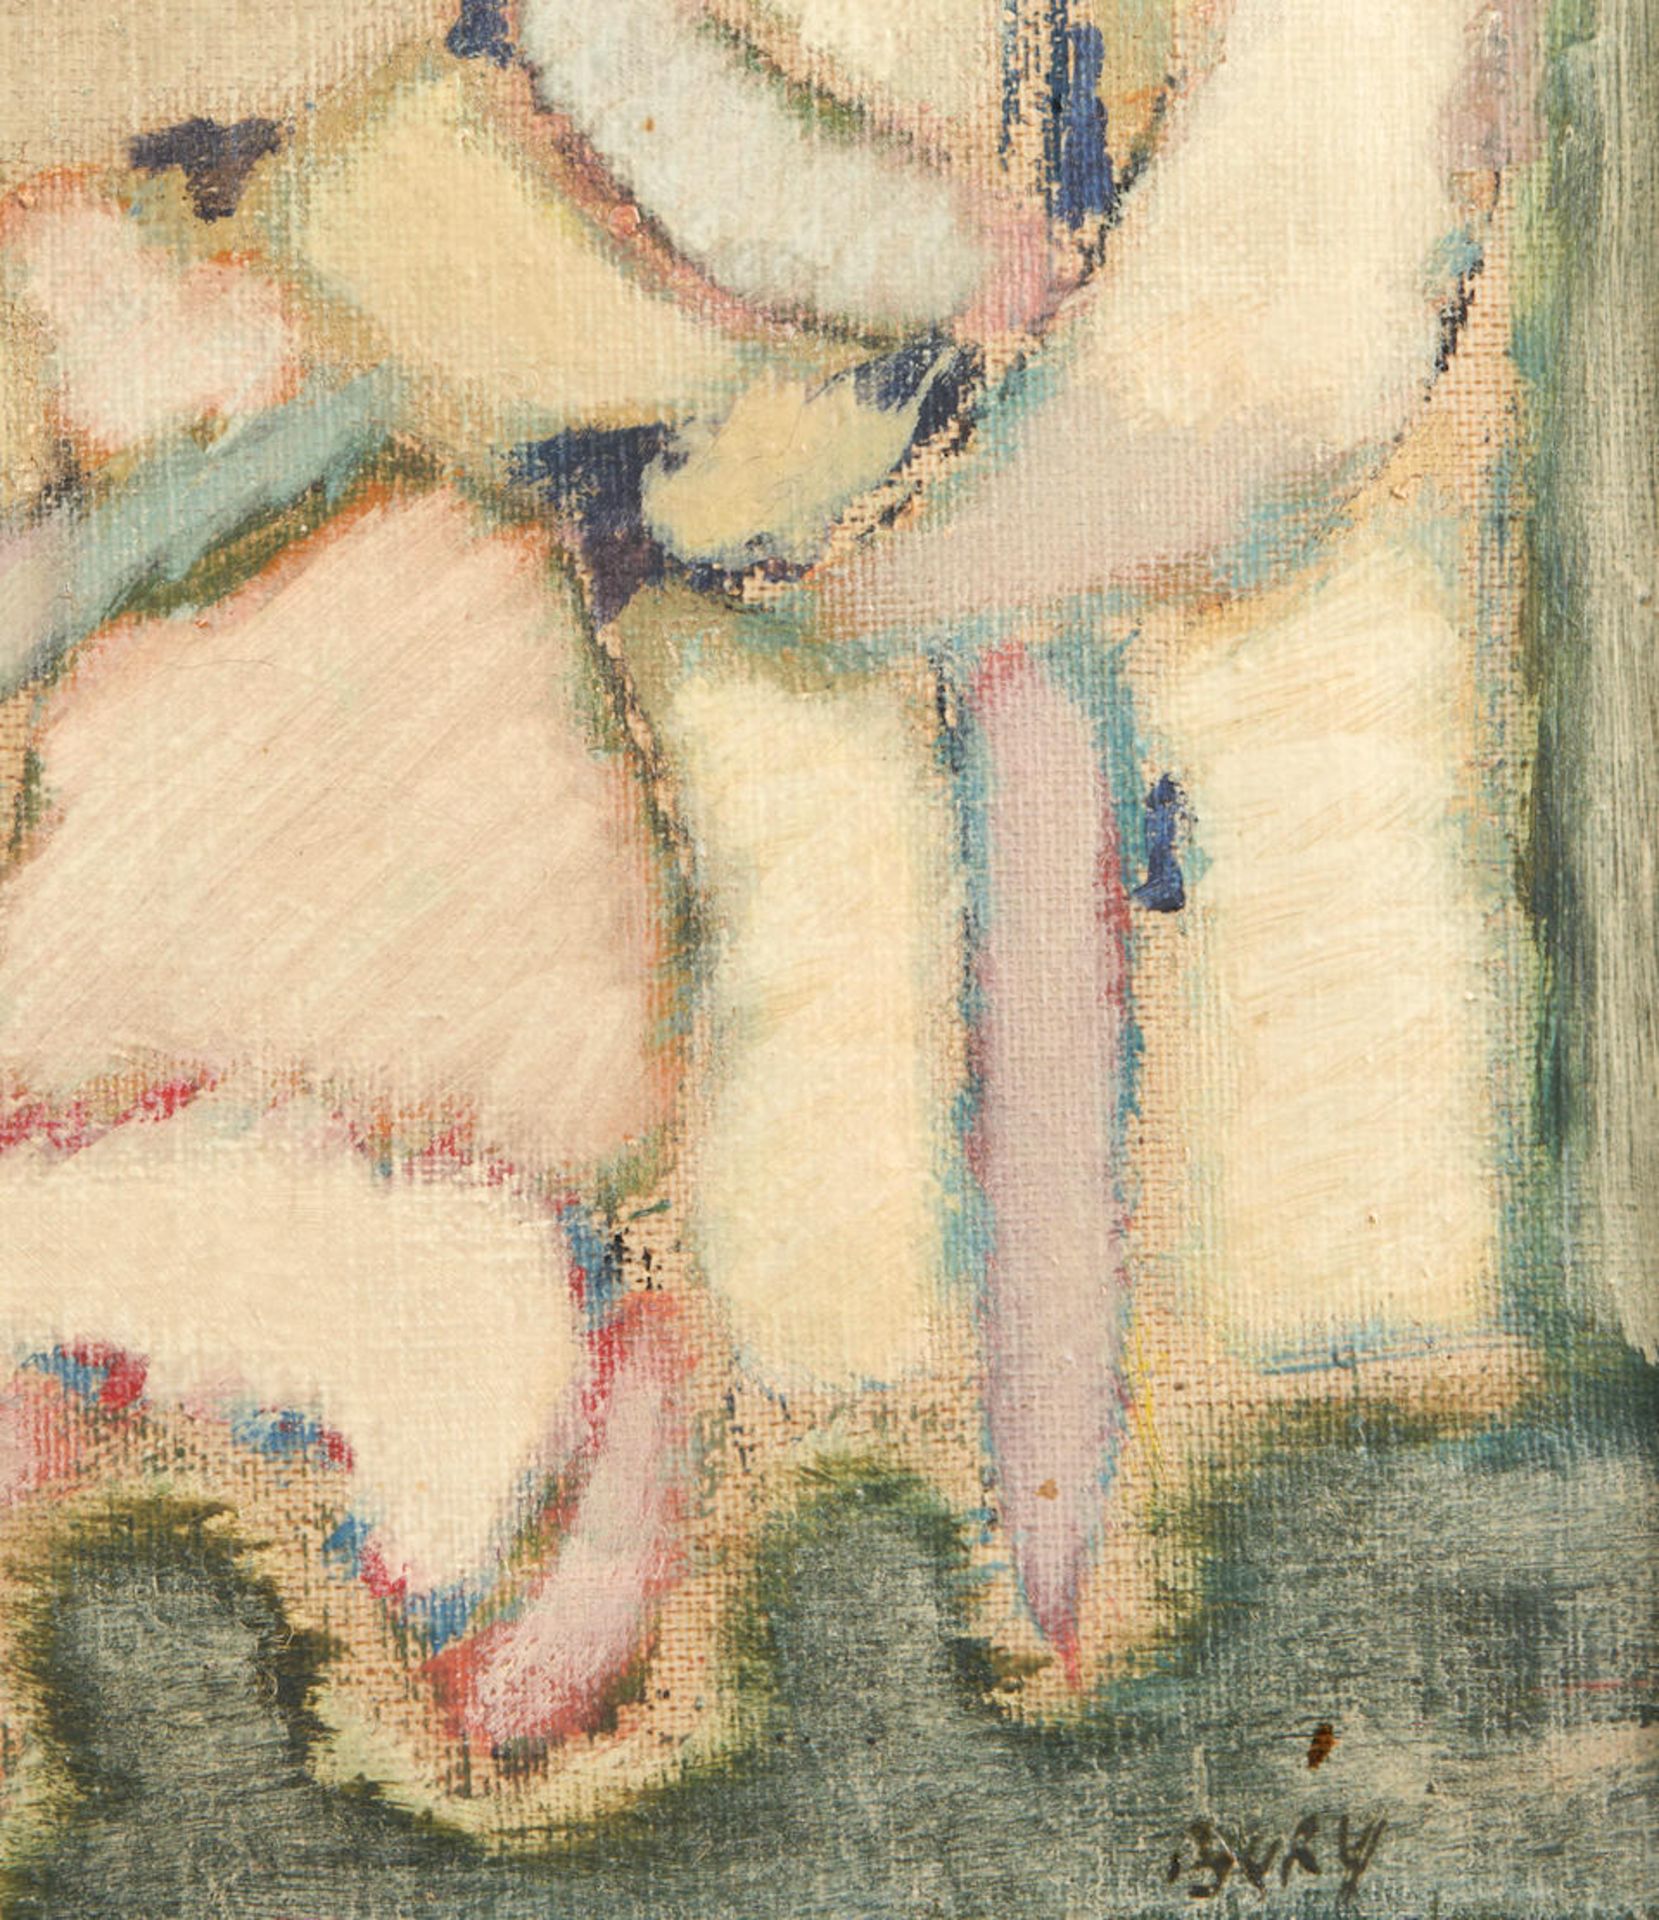 POL BURY (Belgian, 1922-2005) Untitled (framed 56.5 x 47.0 x 3.0 cm (22 1/4 x 18 1/2 x 1 1/8 in).) - Bild 2 aus 4